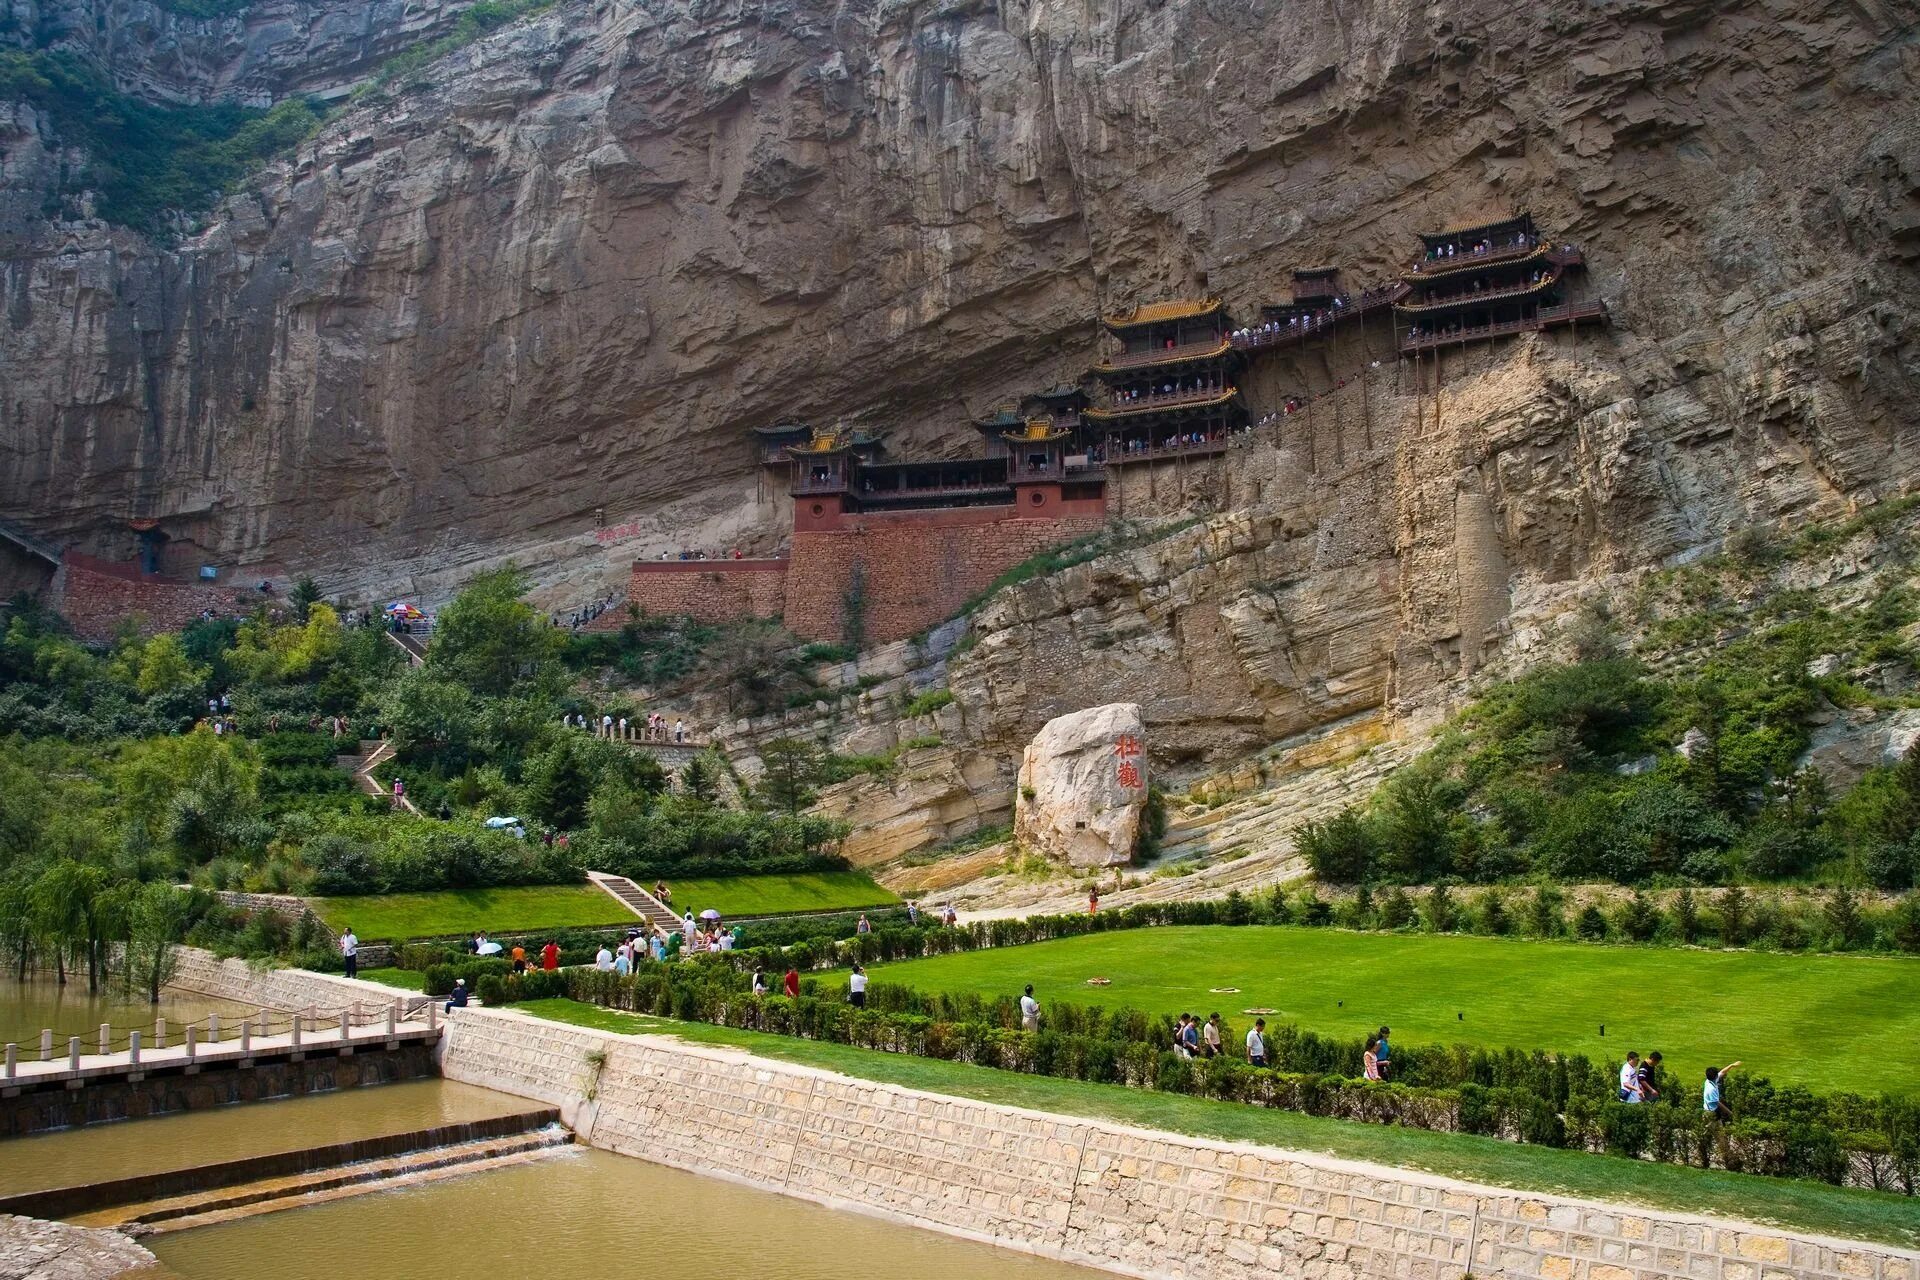 Шаньси китай. Монастырь Сюанькун-сы, Китай. Гора Хэншань Шаньси. Храм Сюанькун-сы висячий монастырь. Висячий монастырь Сюанькун-сы, Шаньси, Китай.